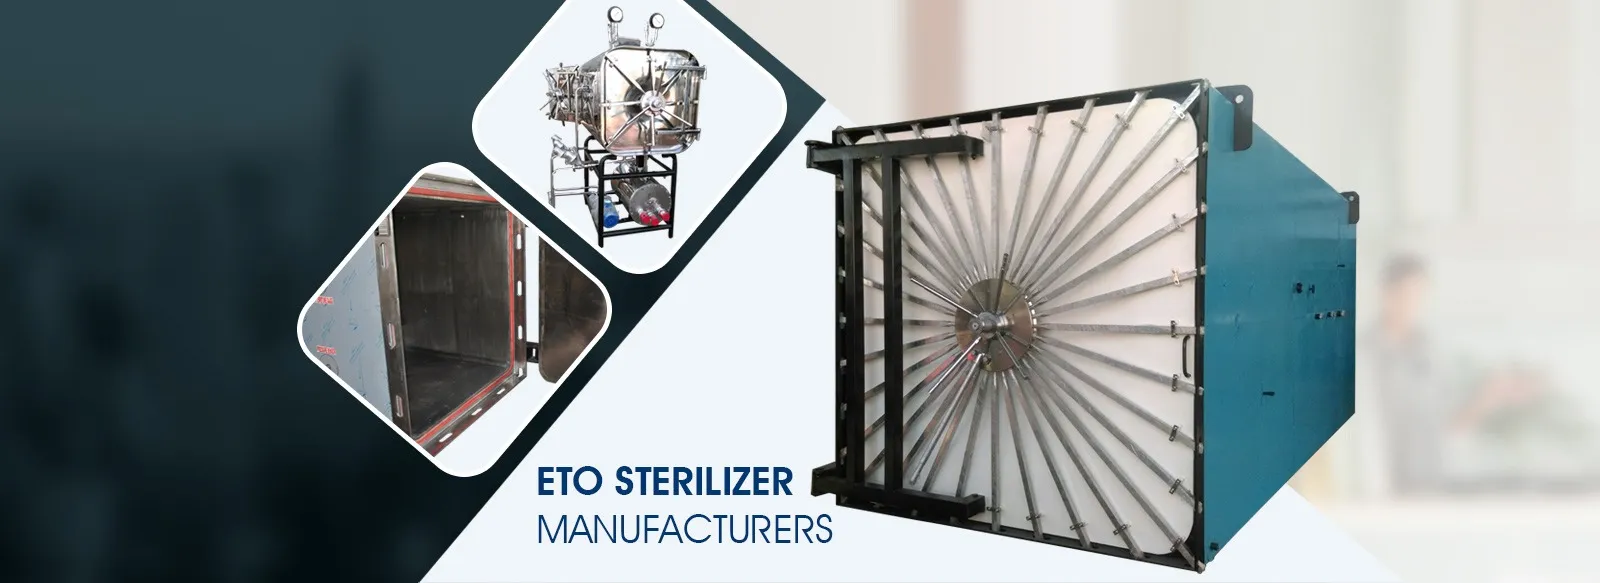 eto sterilizer manufacturer in india